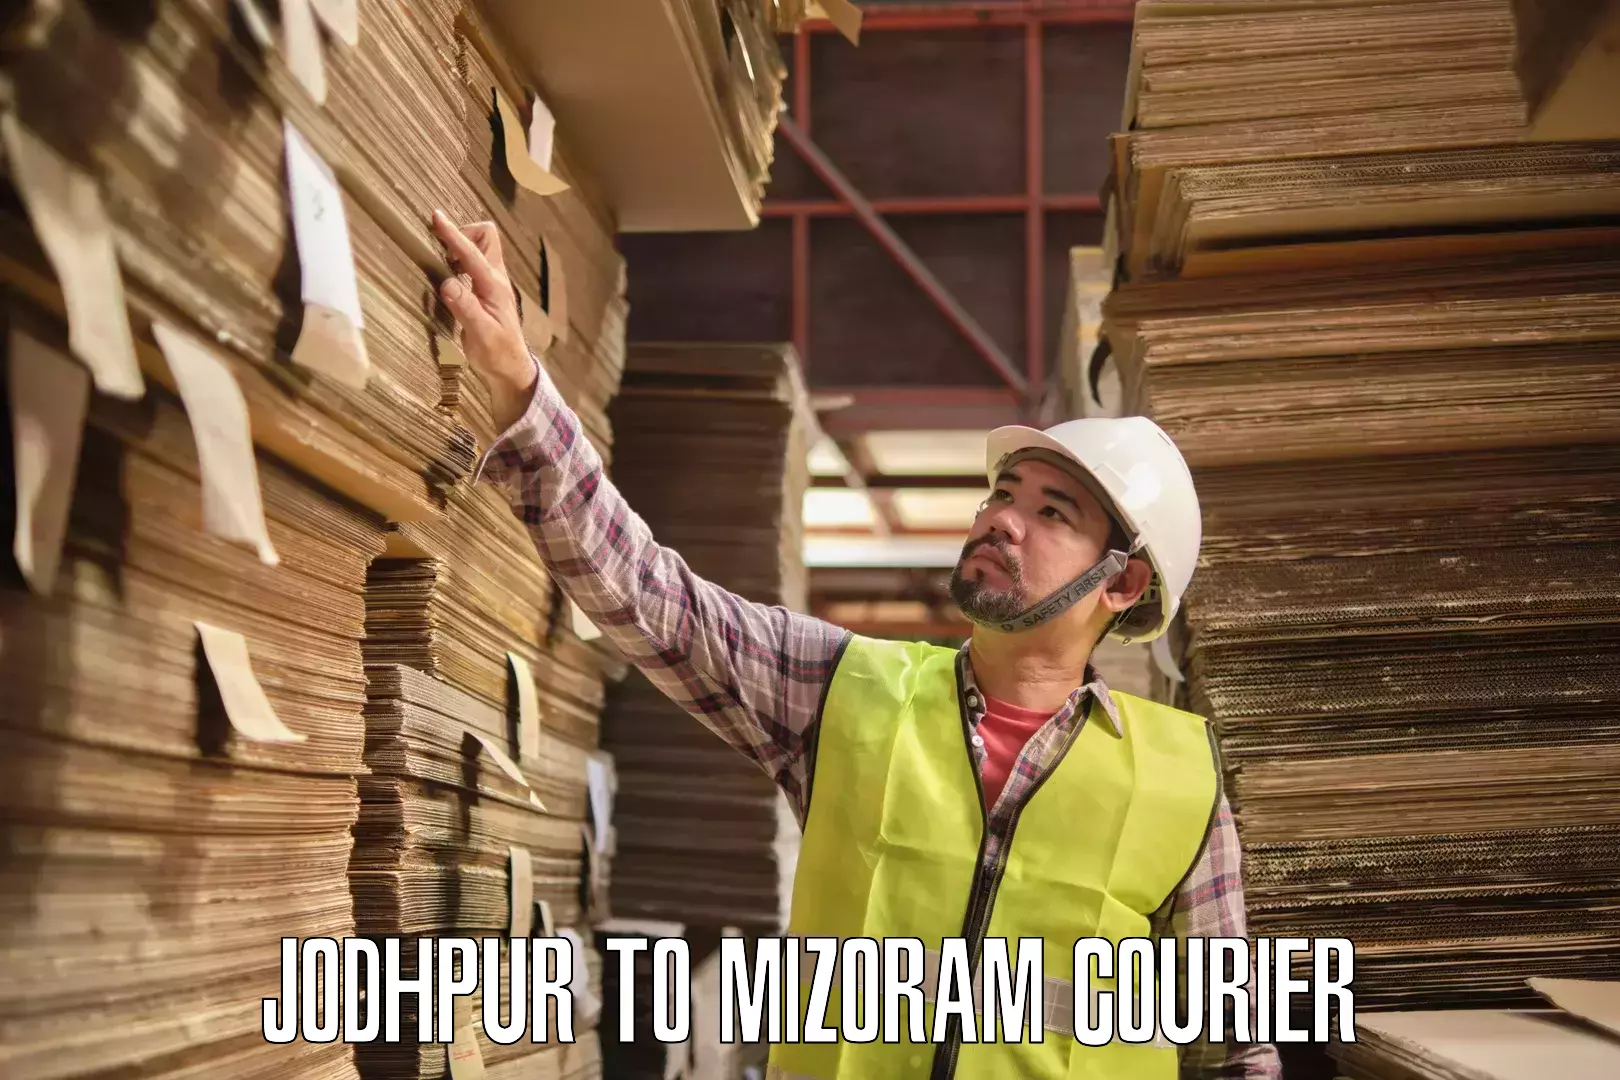 Full-service courier options Jodhpur to Siaha